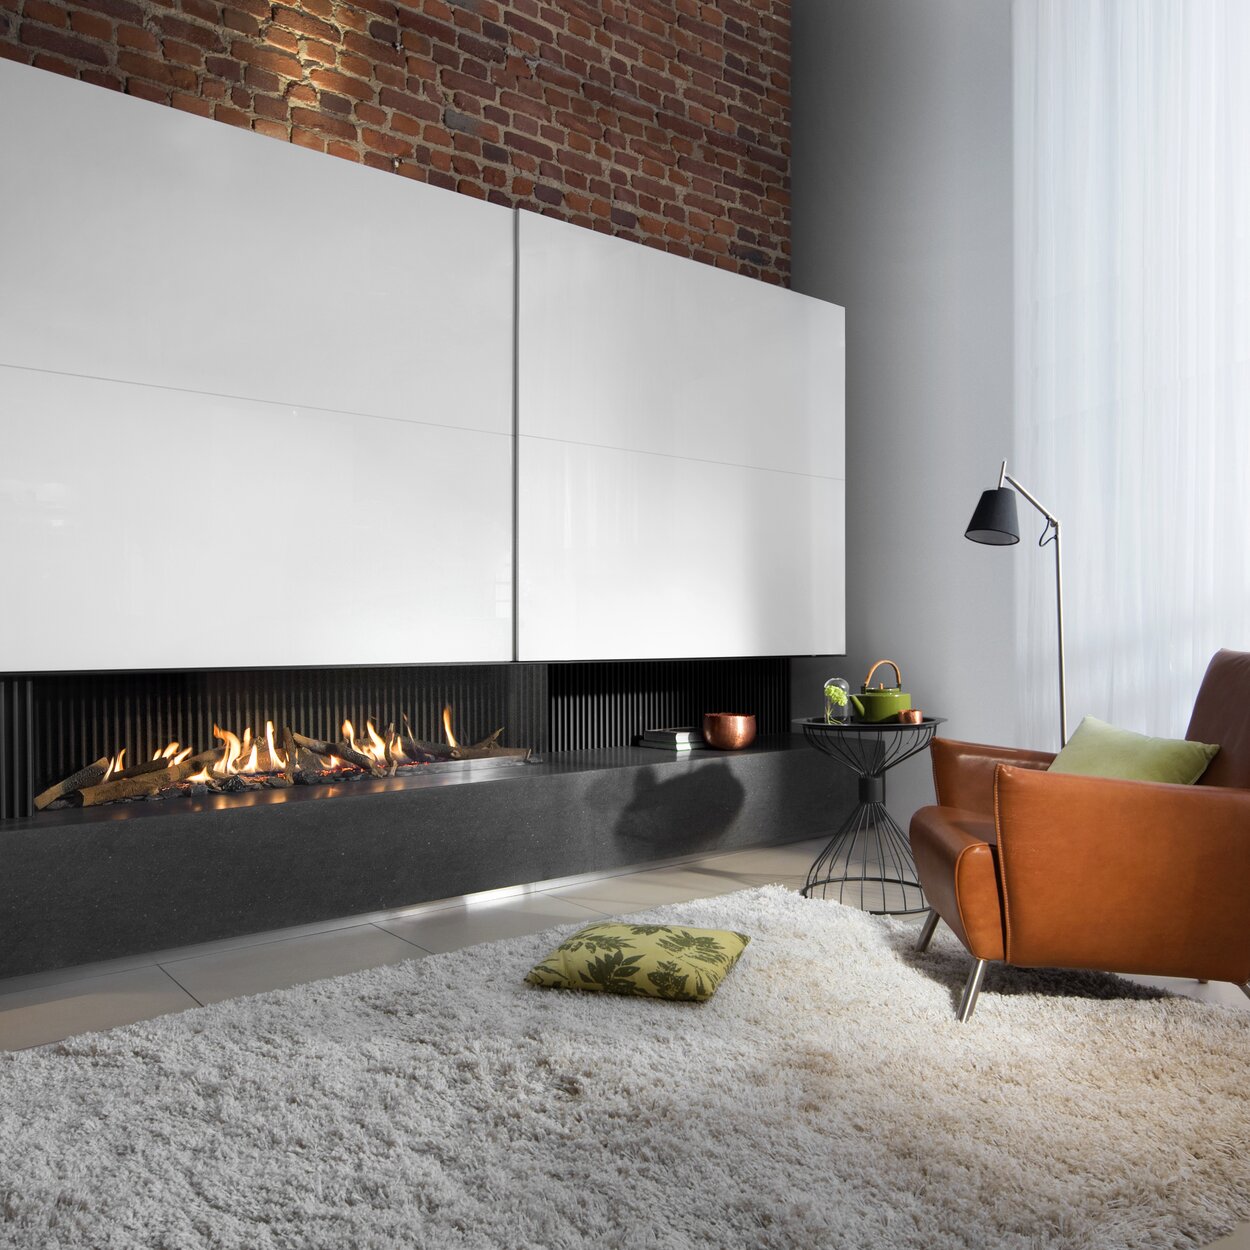 Gas fireplace G165/37C 2-sided glazed on black base unit with white fireplace panelling on brookstone wall